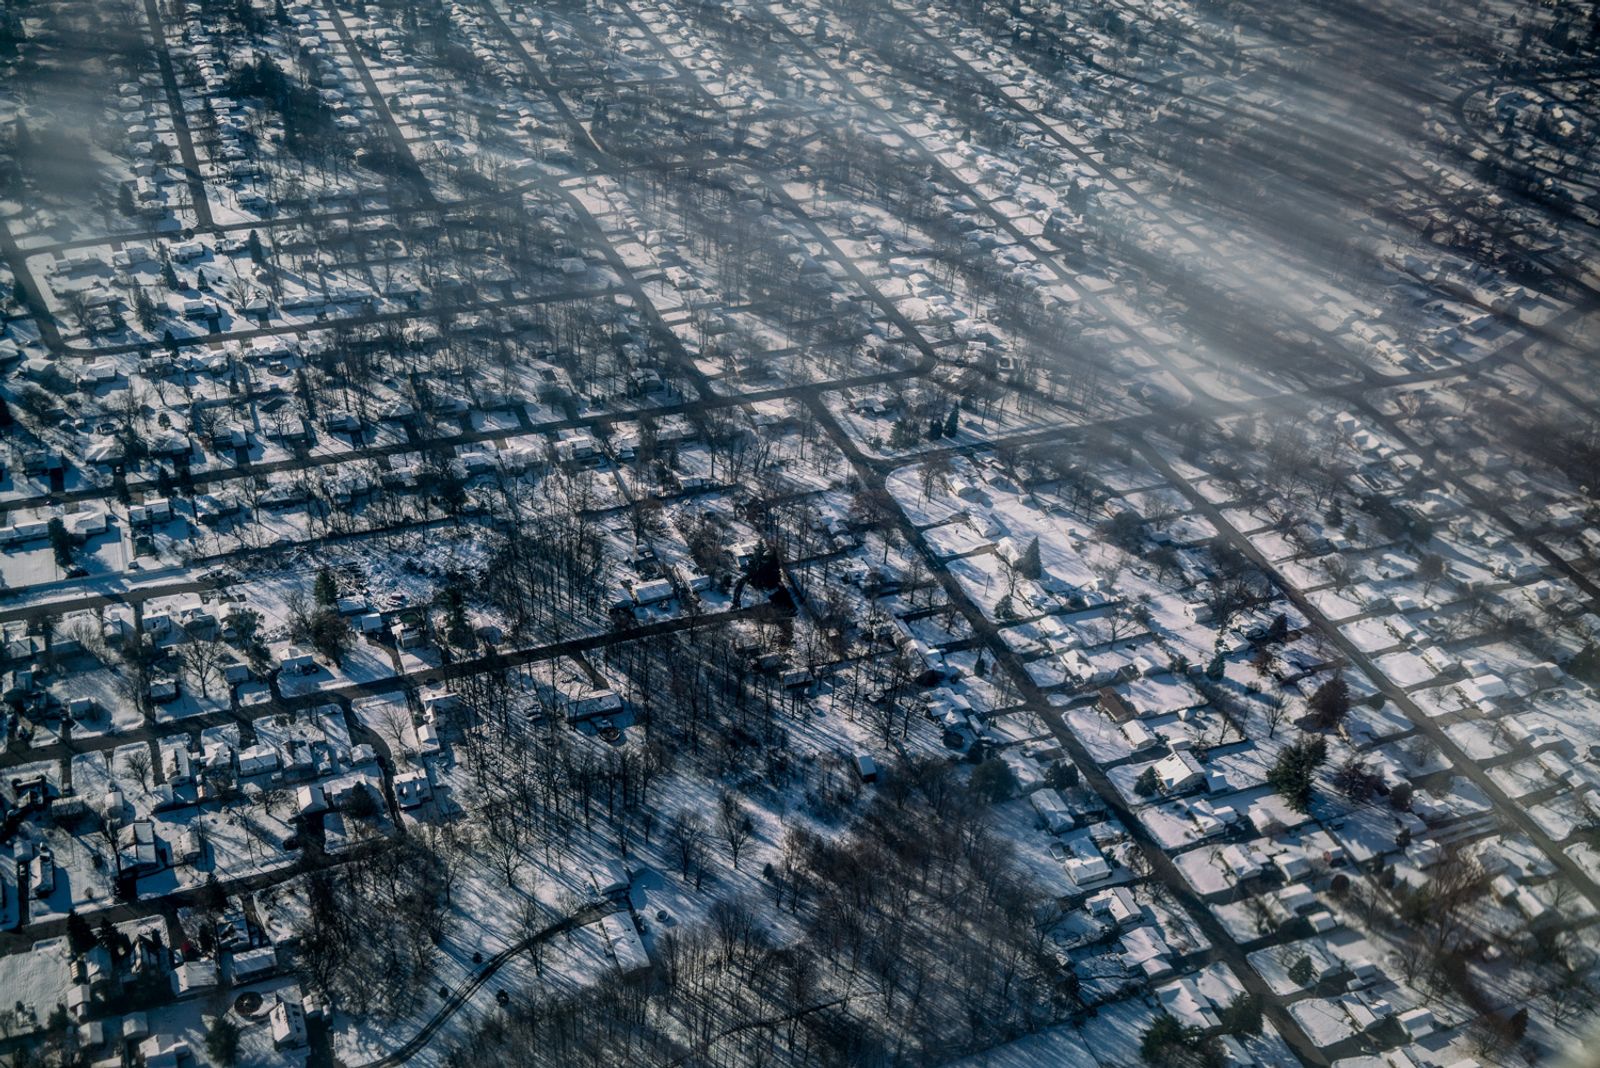 © Zackary Canepari - Flint, Michigan from a dirty plane window.